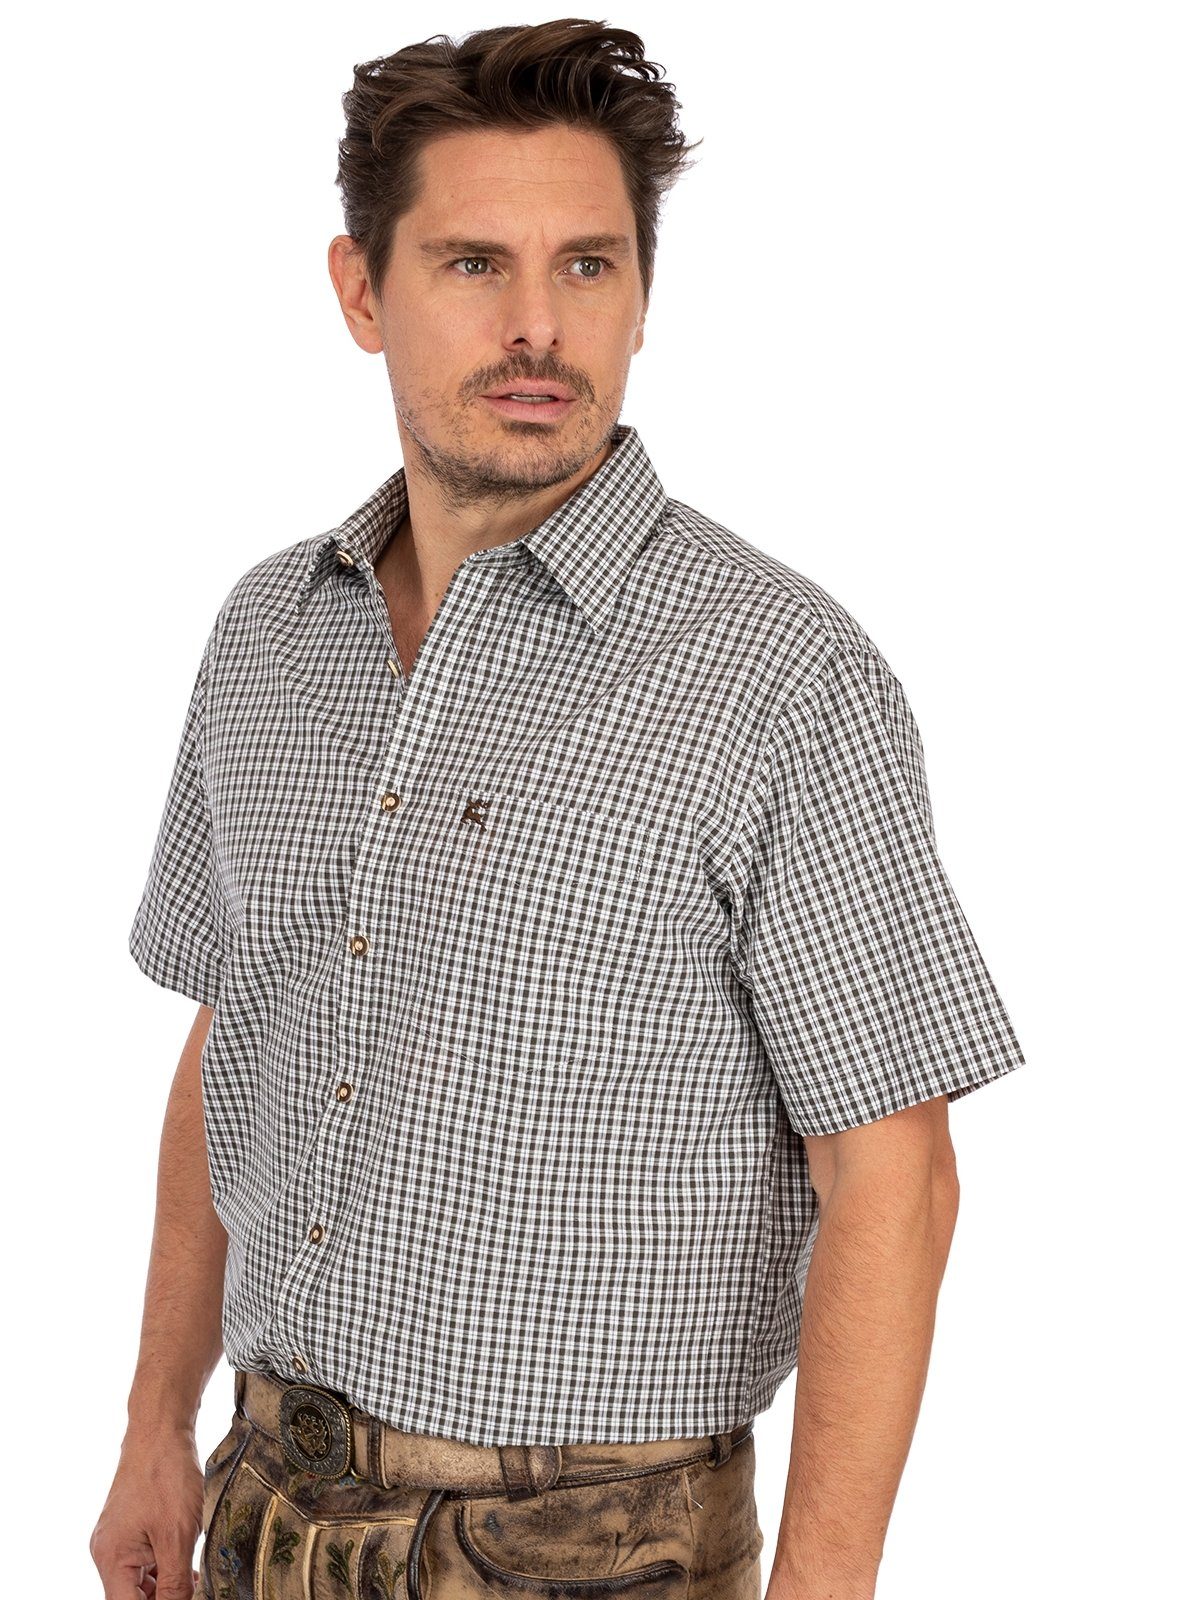 Karo STARNBERG Trachtenhemd grün (Regular OS-Trachten Fit) Kurzarmhemd